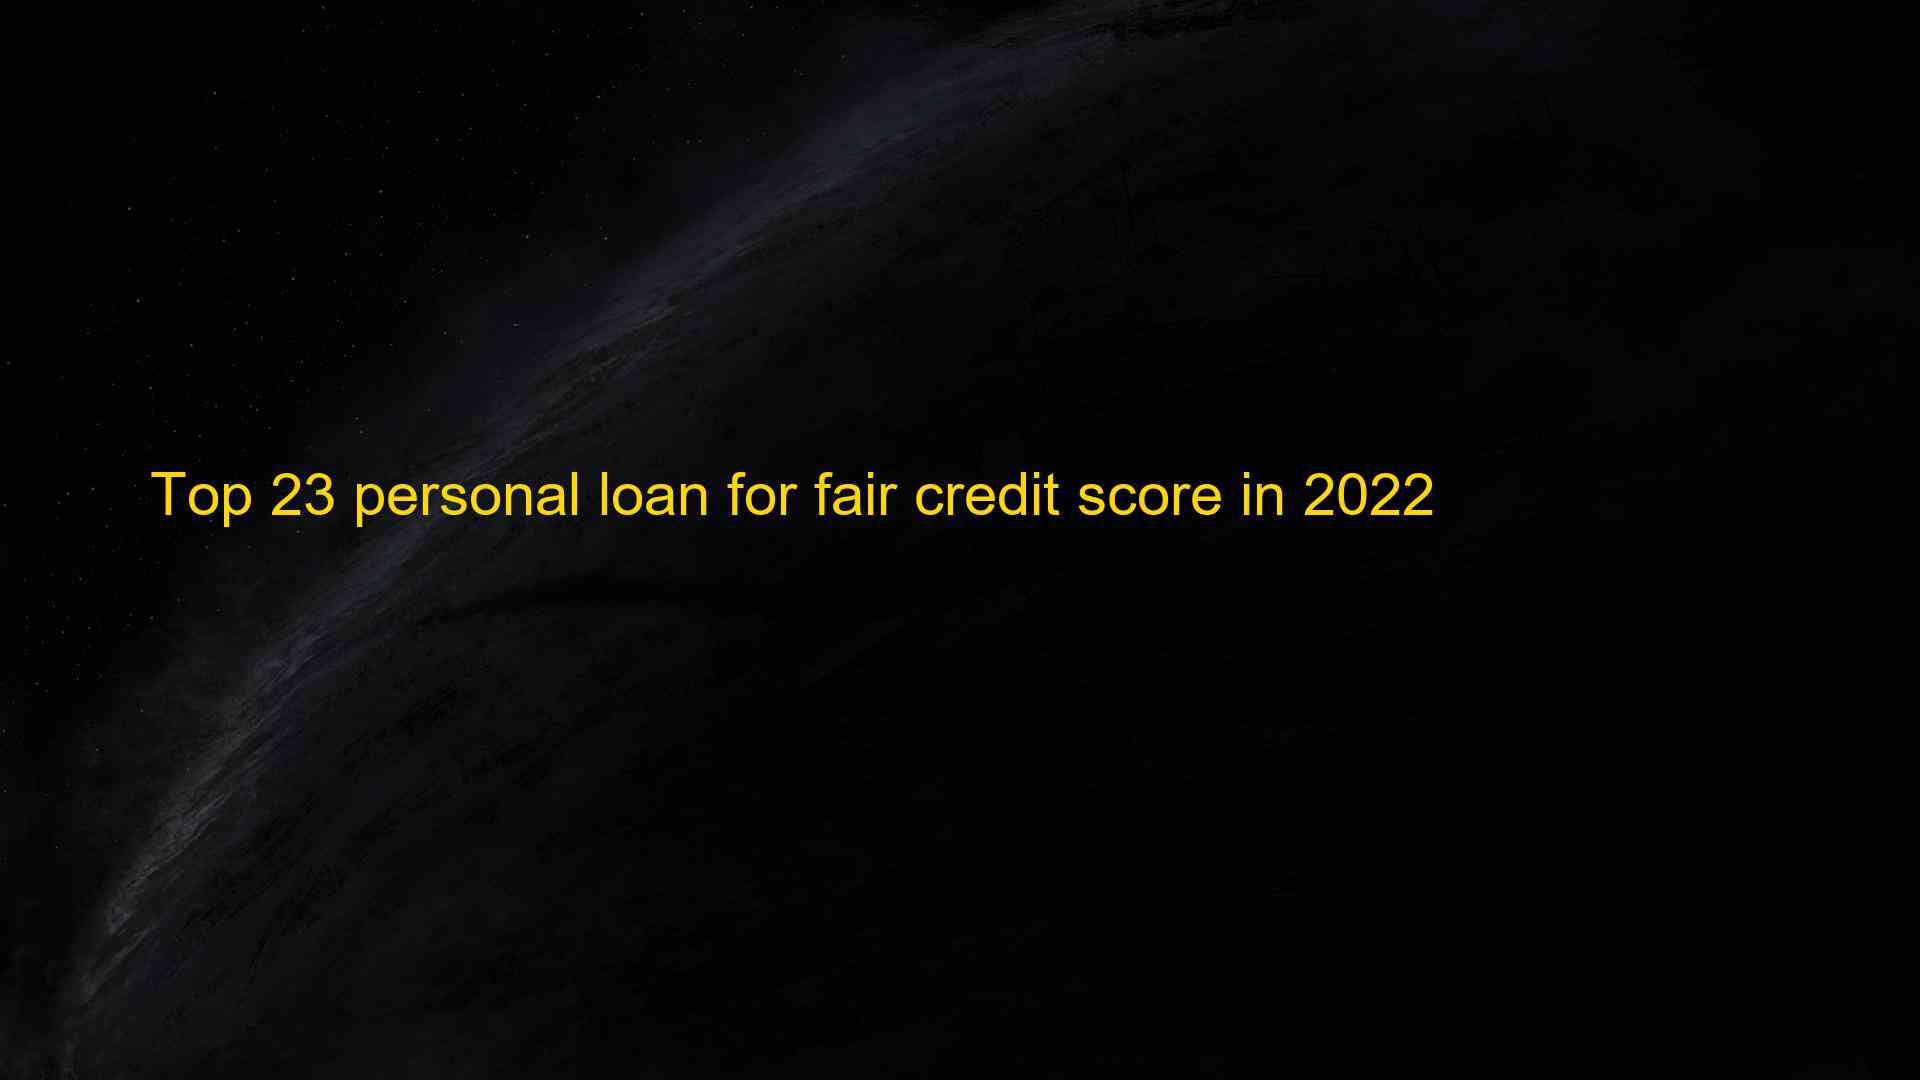 Top 23 personal loan for fair credit score in 2022 1660193438